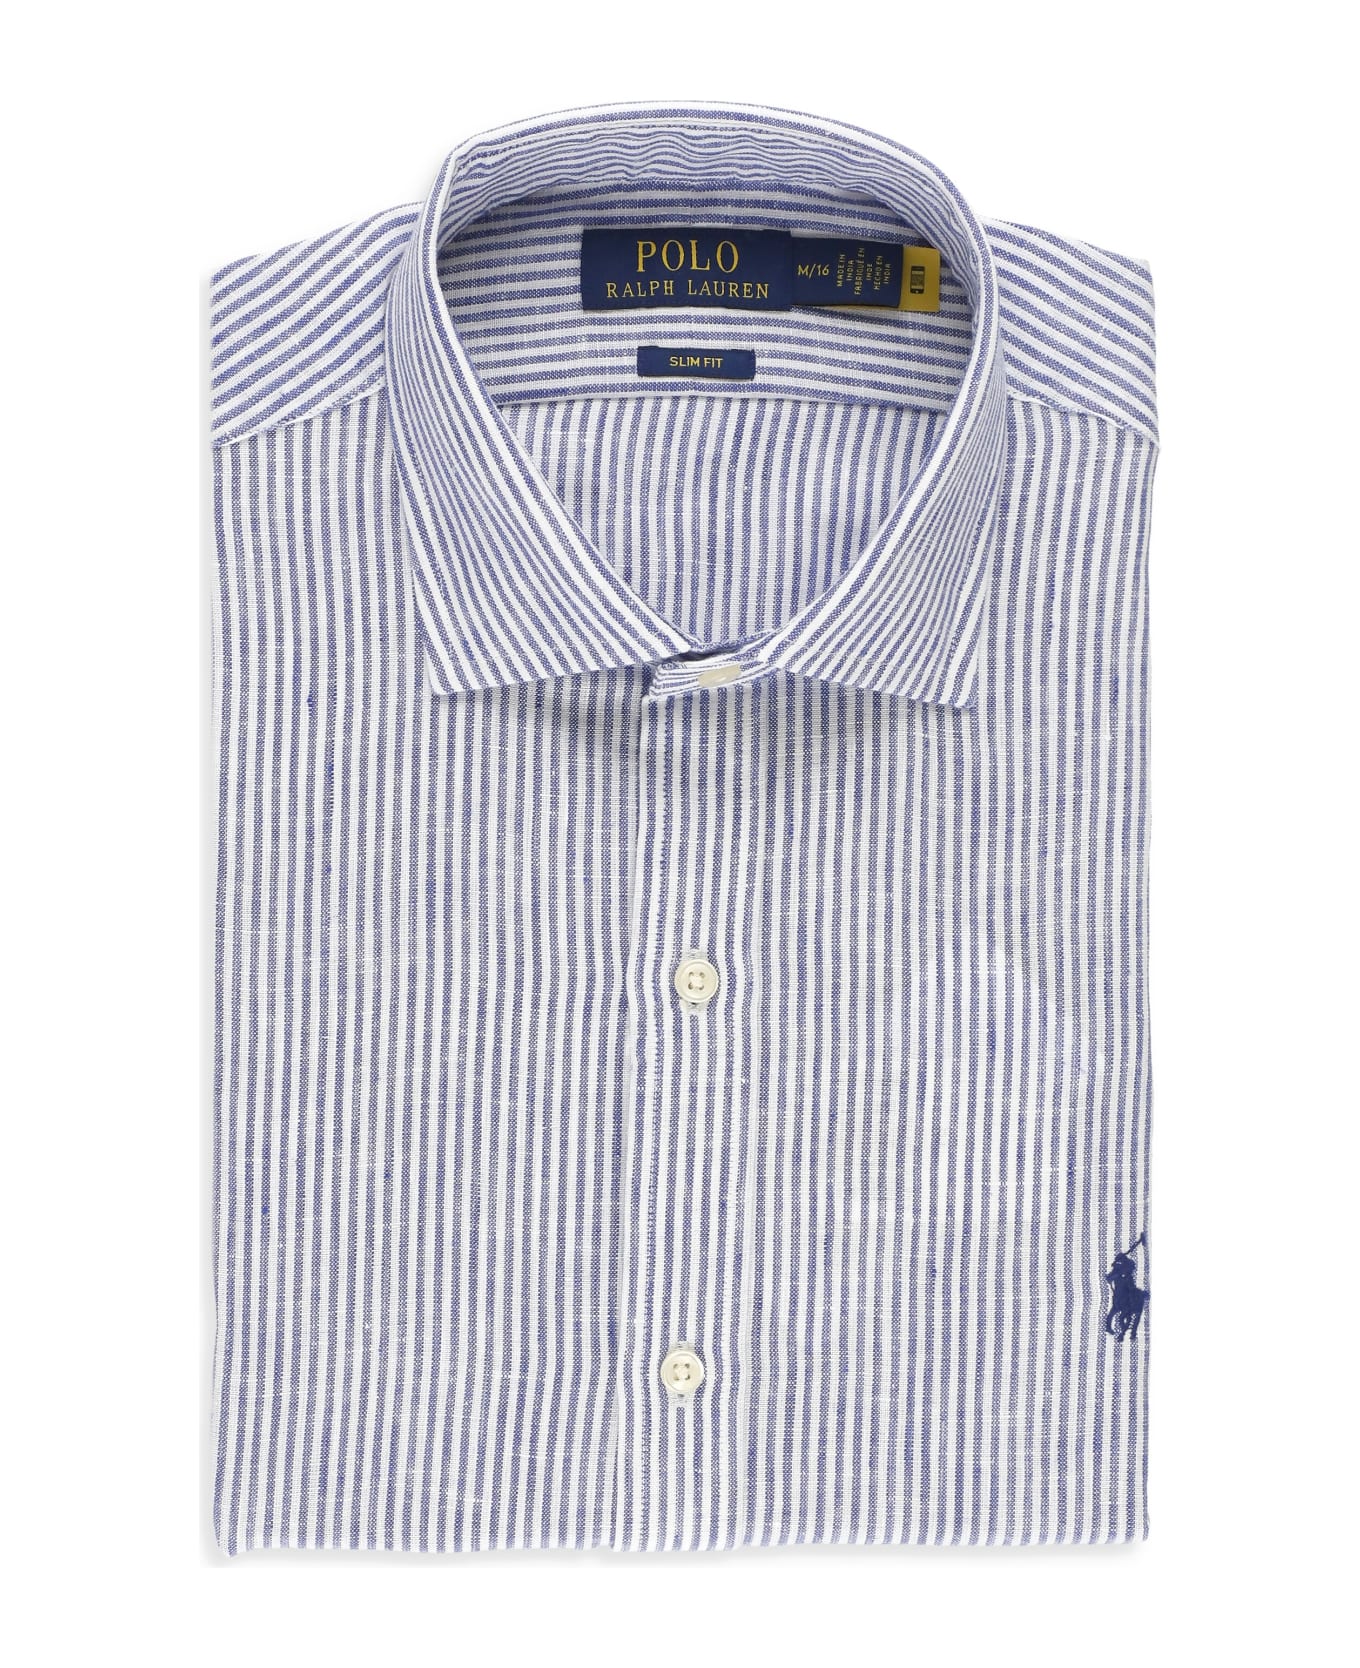 Polo Ralph Lauren Pony Cotton Shirt Polo Ralph Lauren - WHITE/BLU